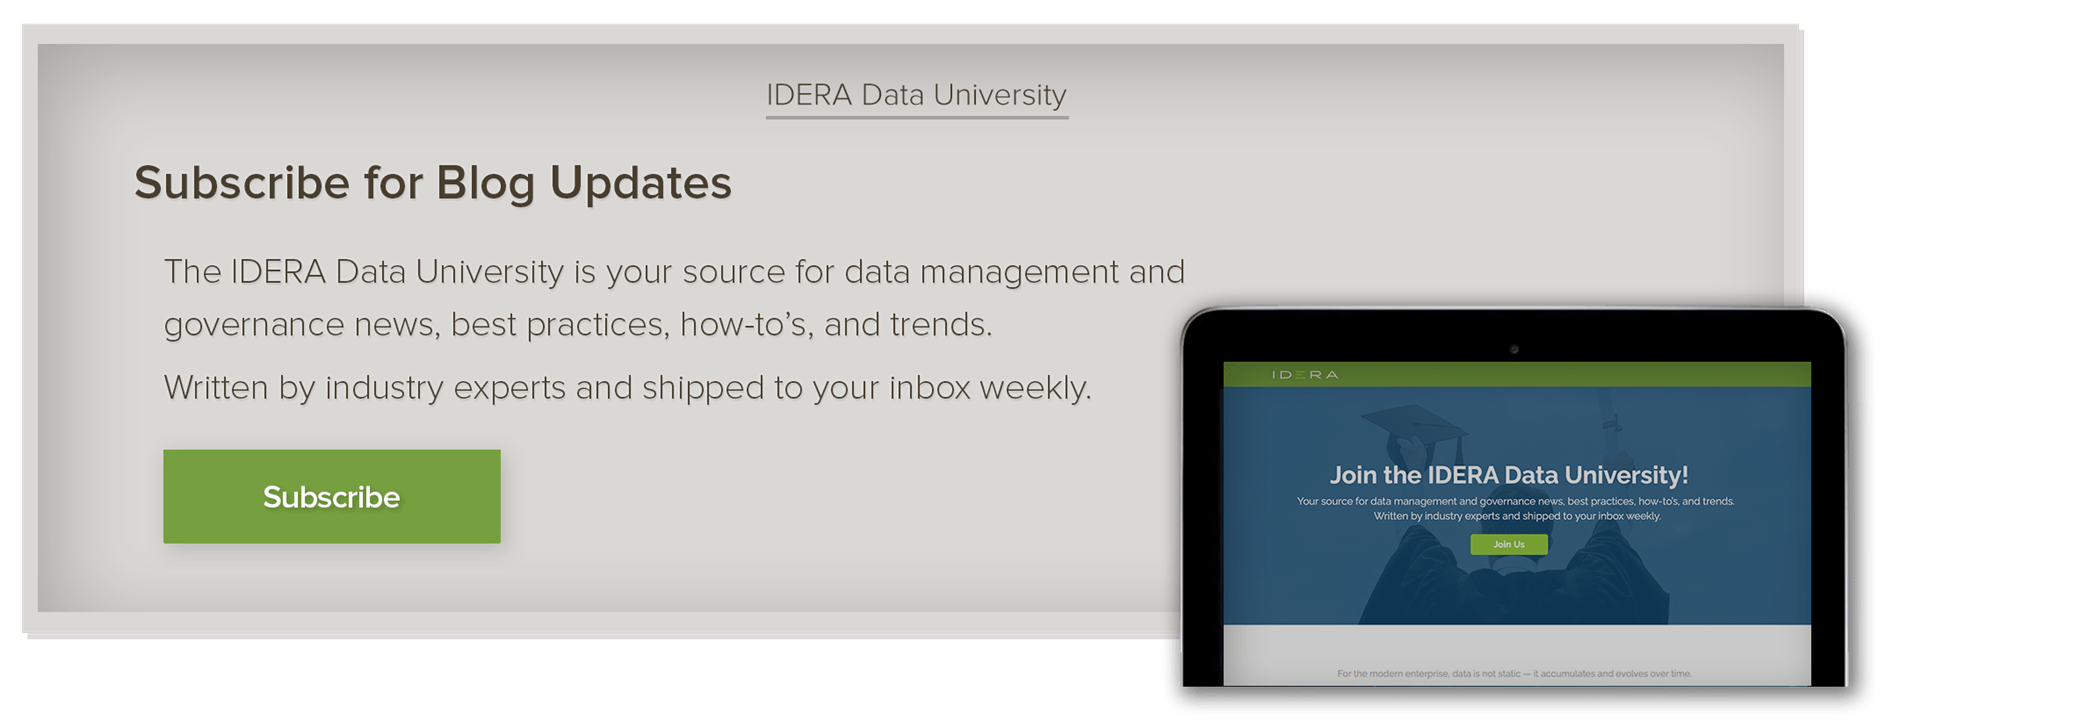 IDERA Data University